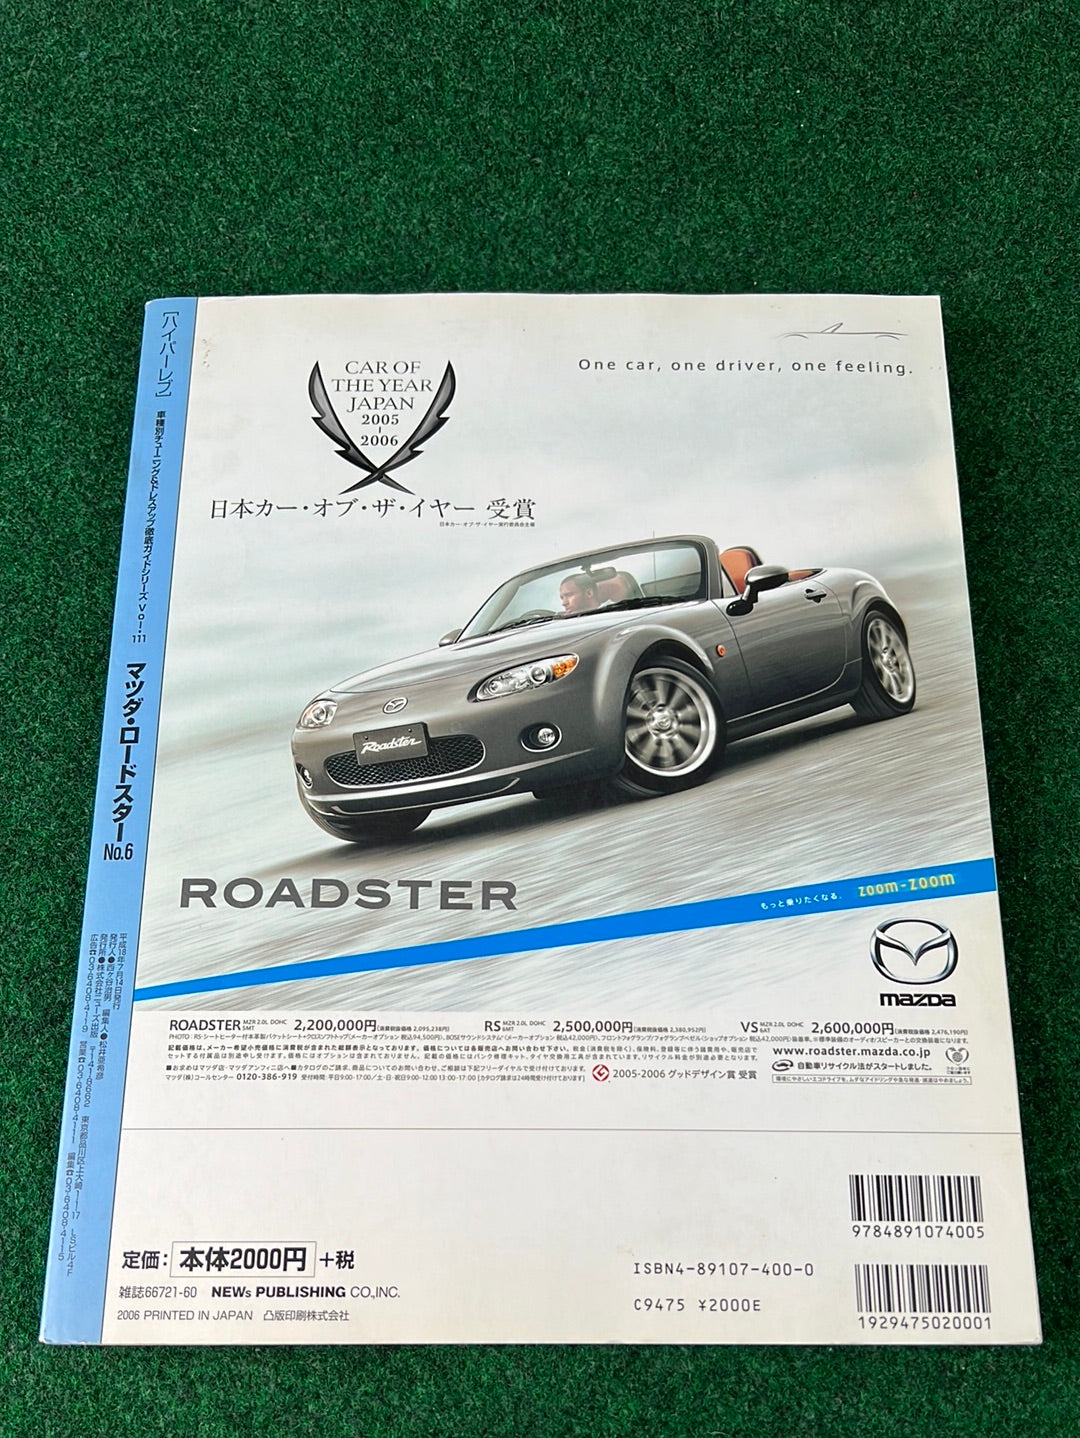 Hyper REV Magazine - Mazda Eunos Roadster Miata Vol. 111 No. 6